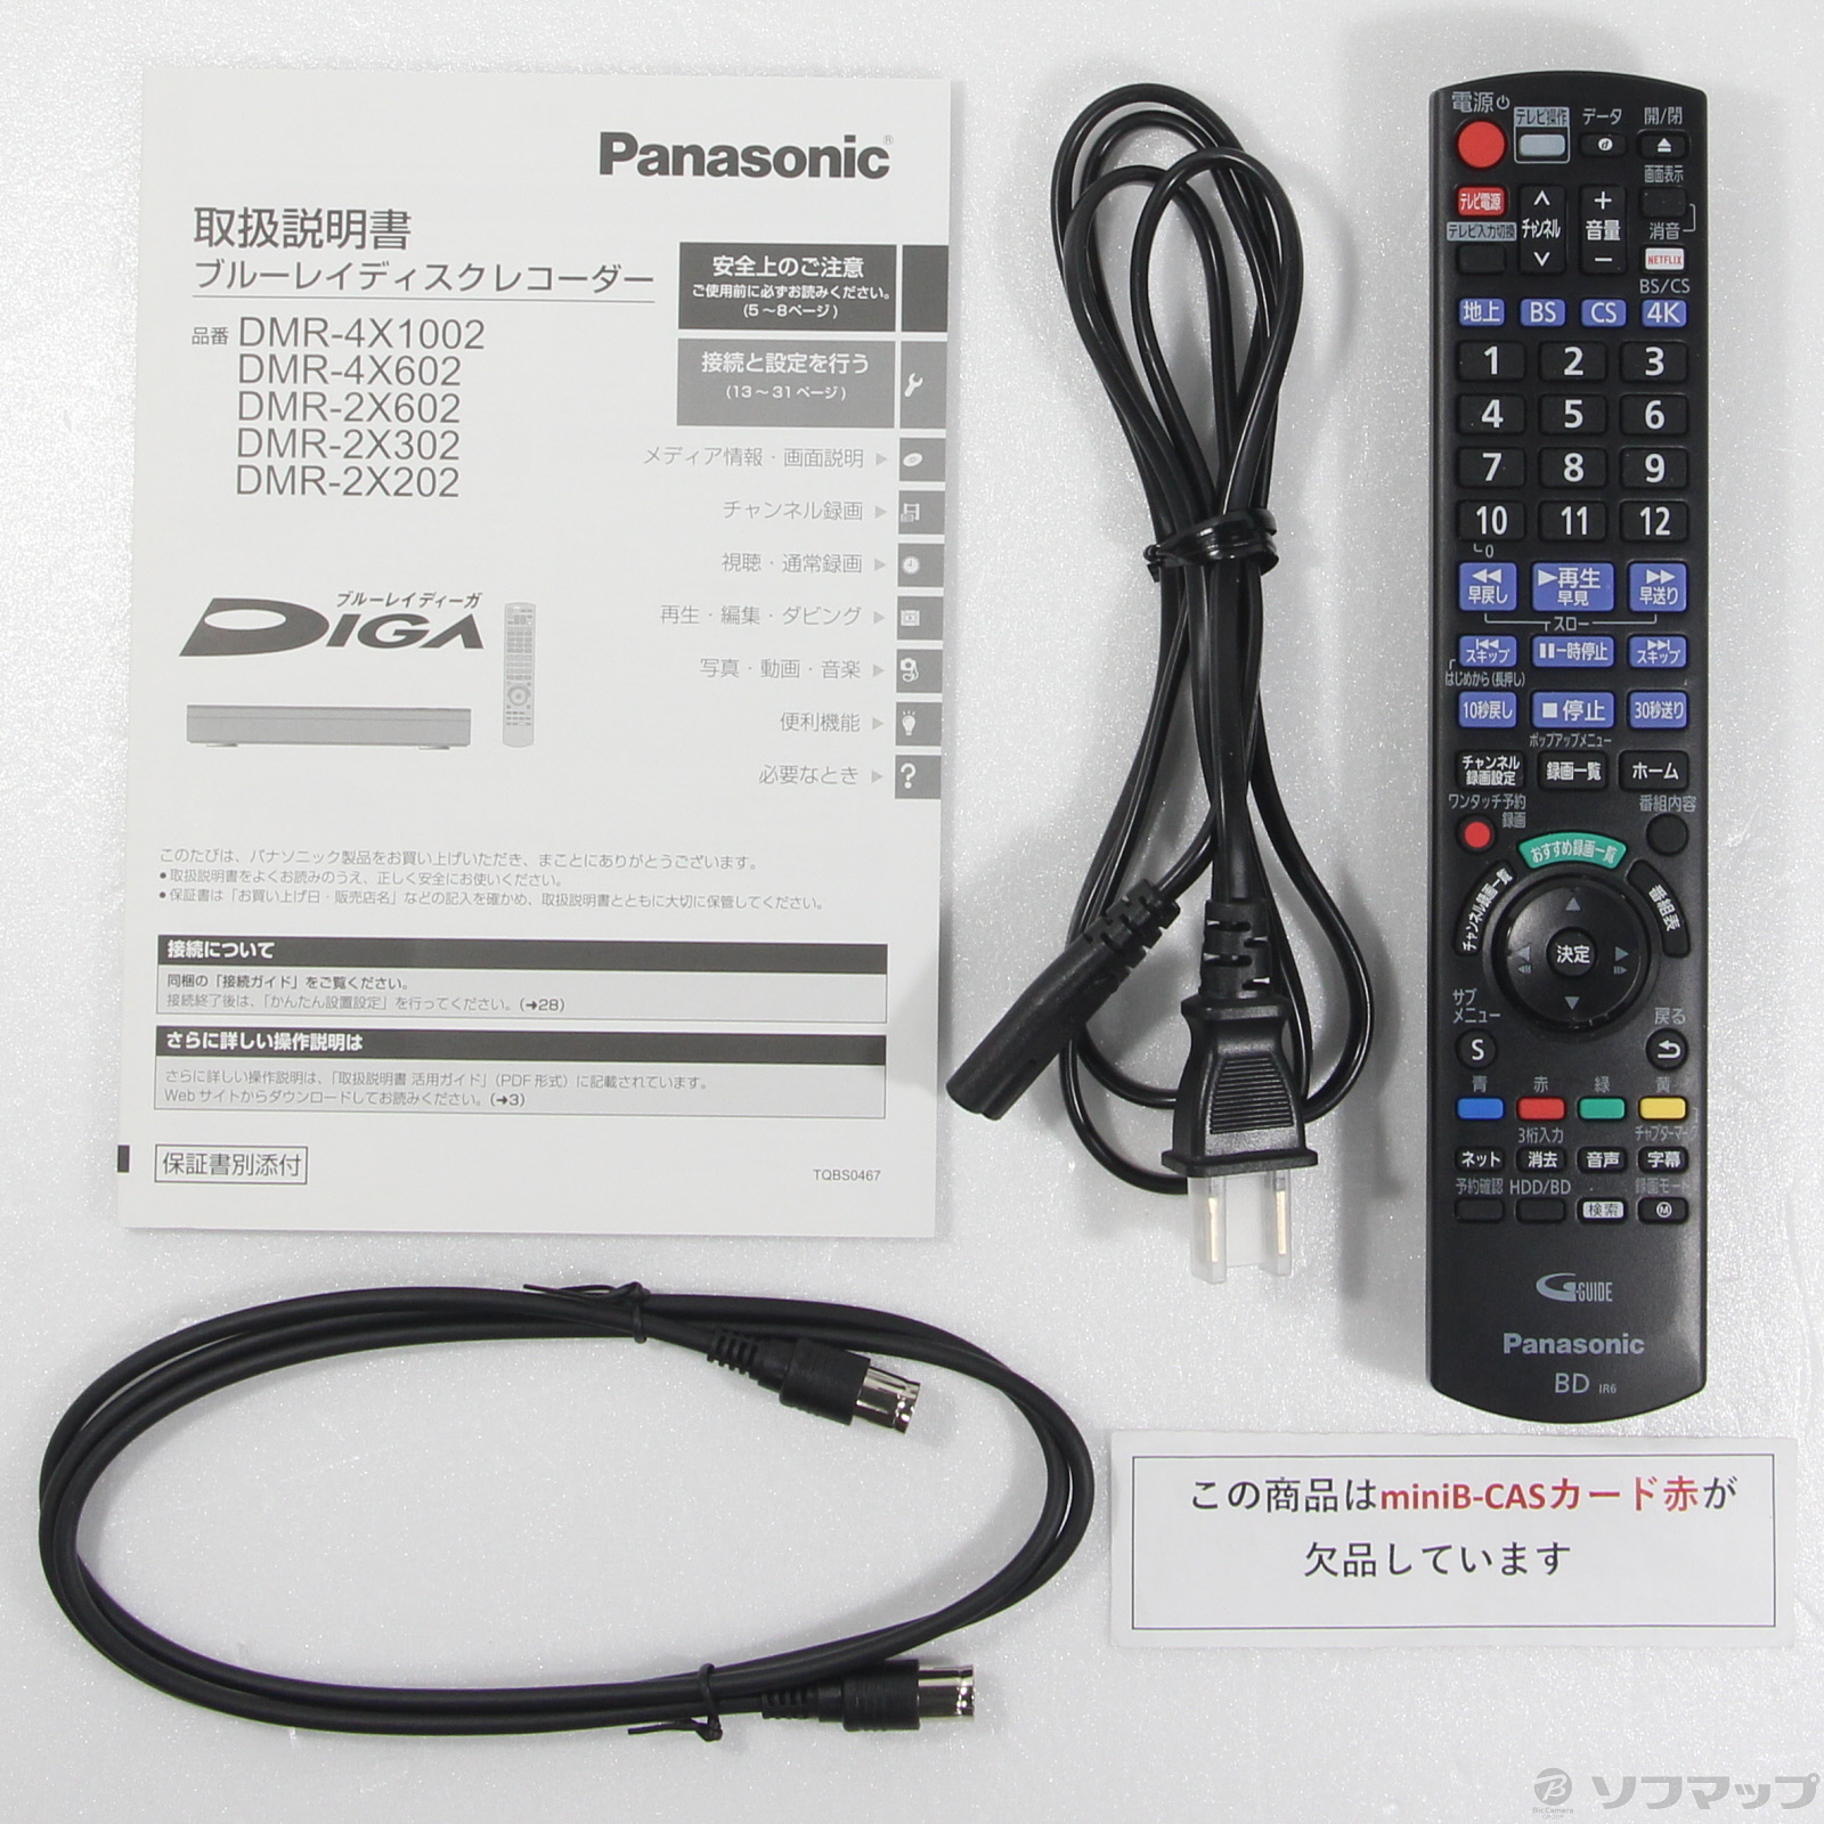 Panasonic パナソニック DMR-4X1000 中古品 - テレビ/映像機器